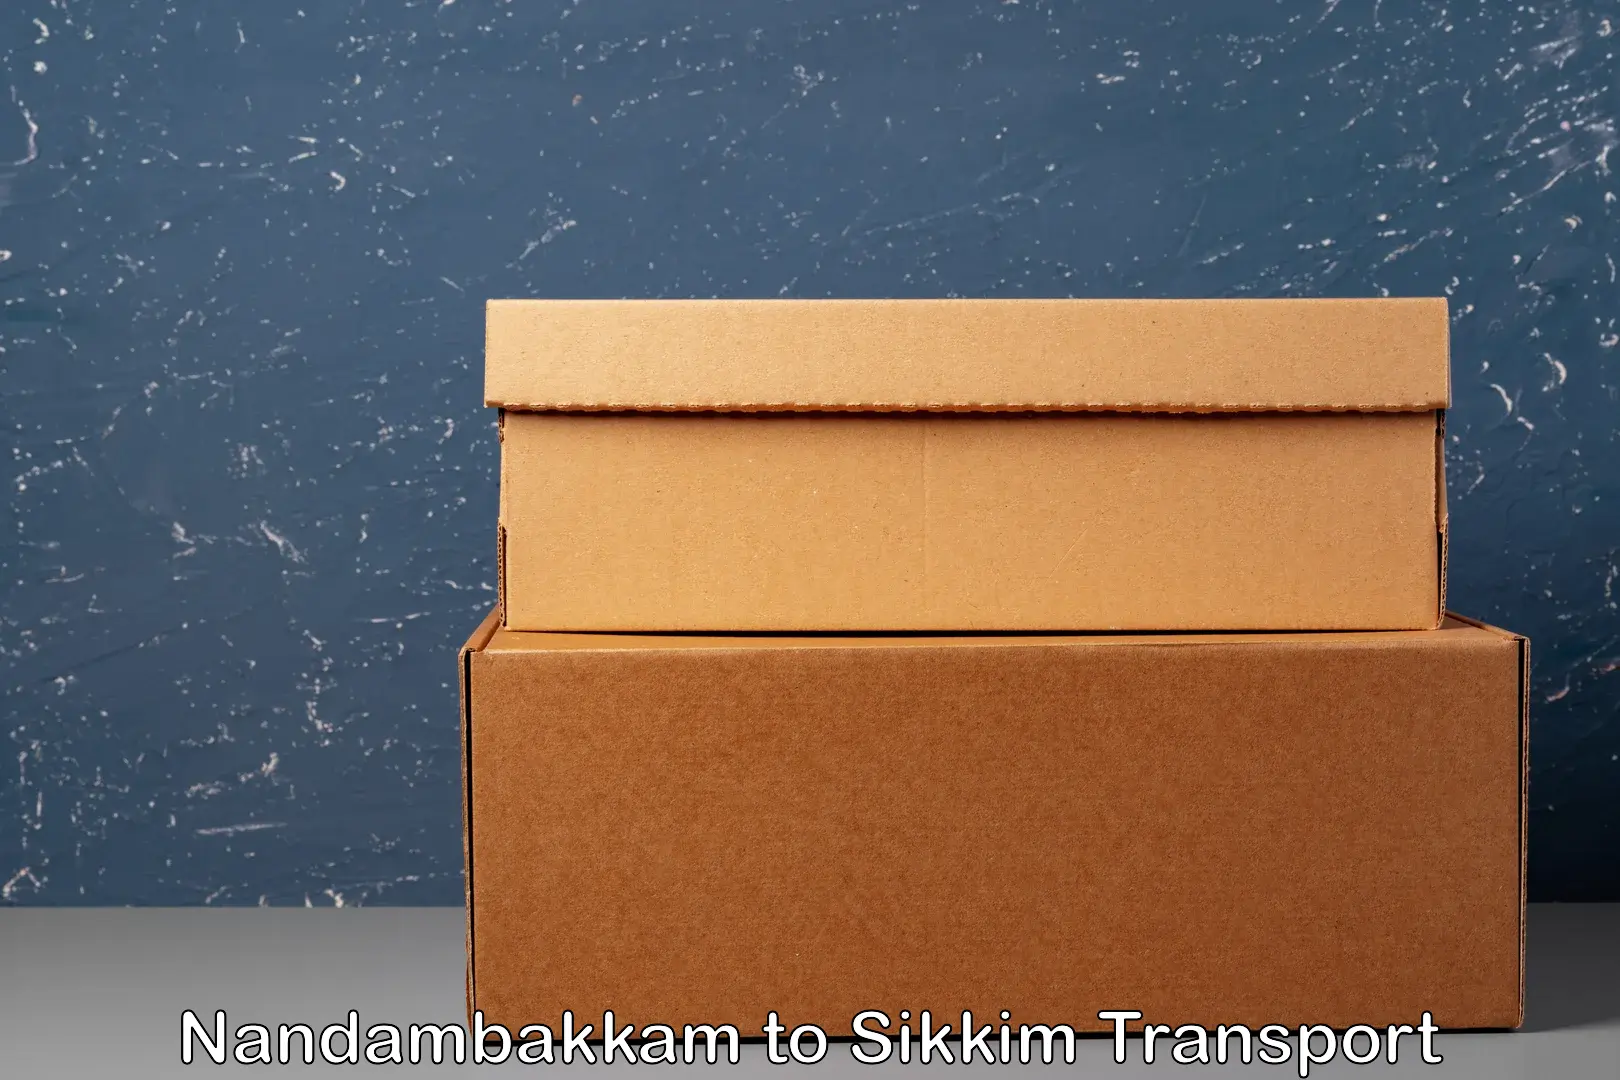 Container transport service Nandambakkam to Sikkim